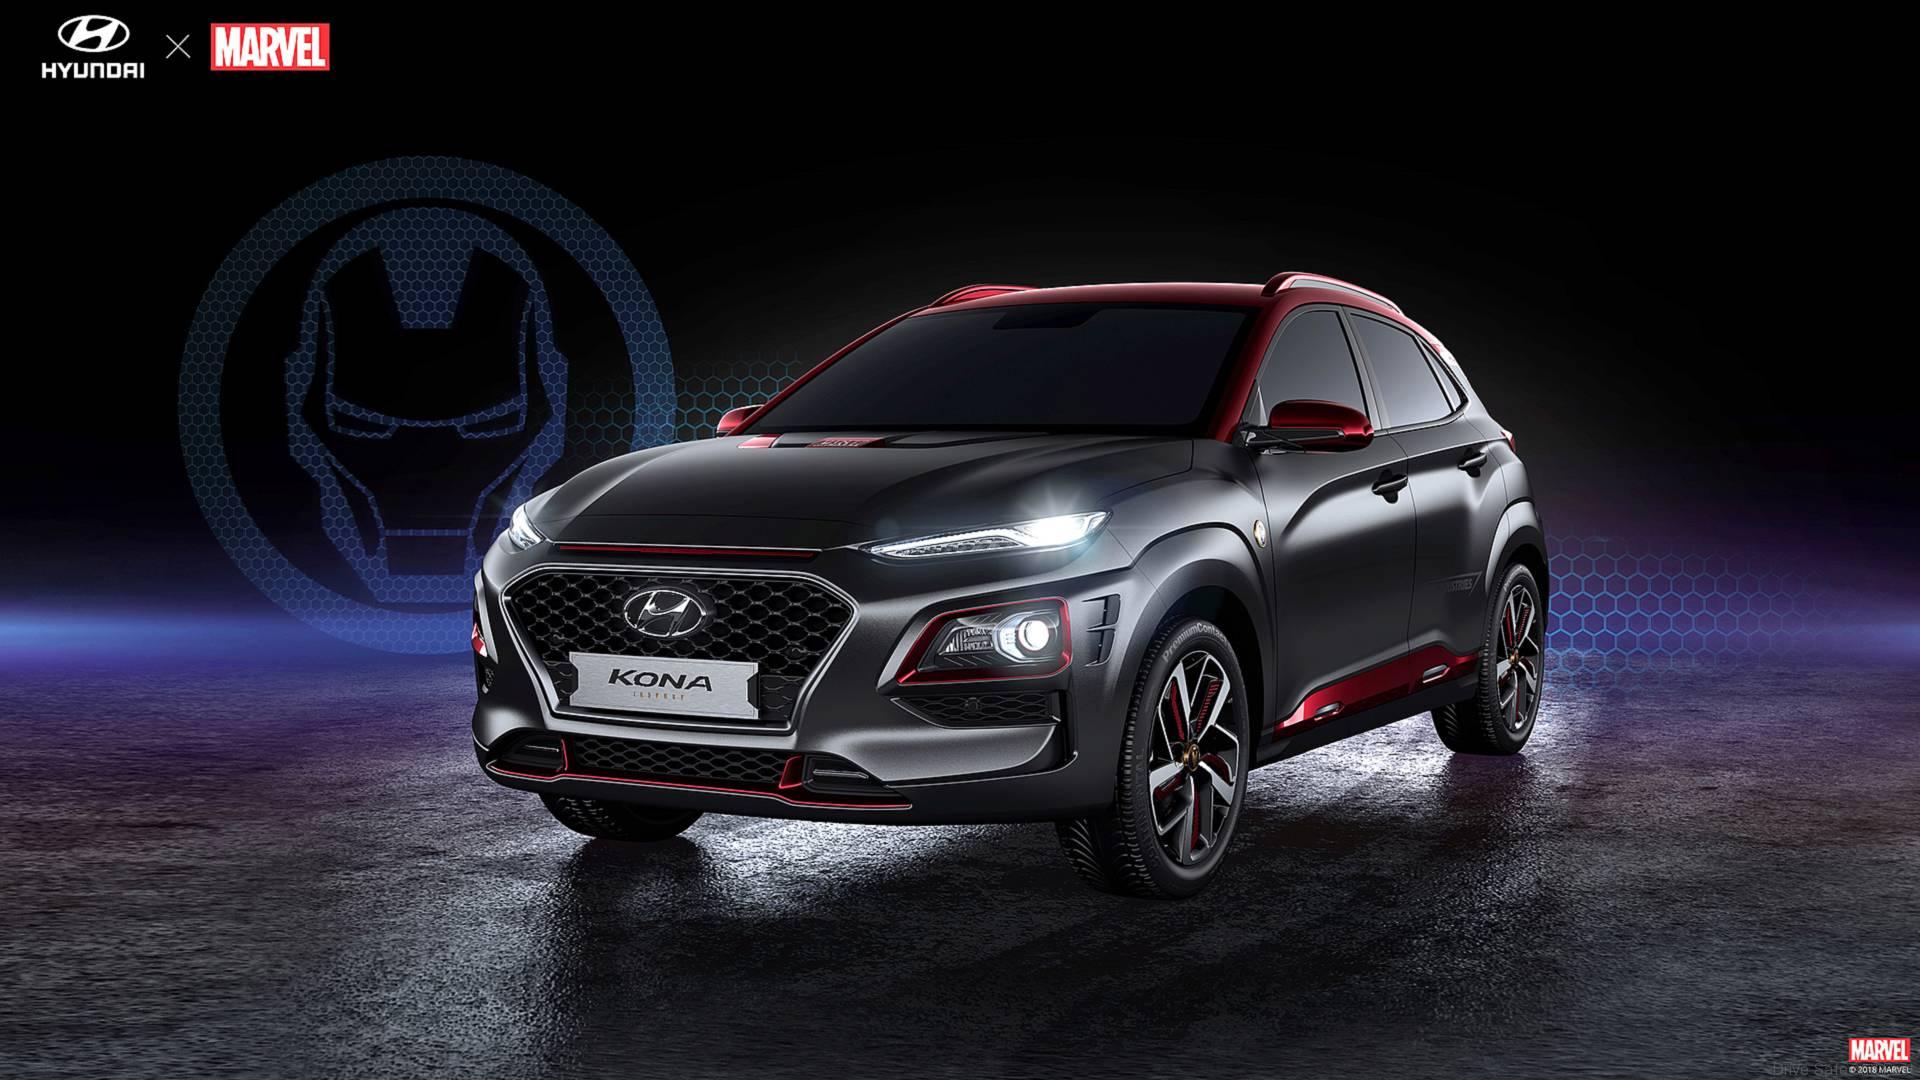 Hyundai Kona ‘Iron Man’ Edition